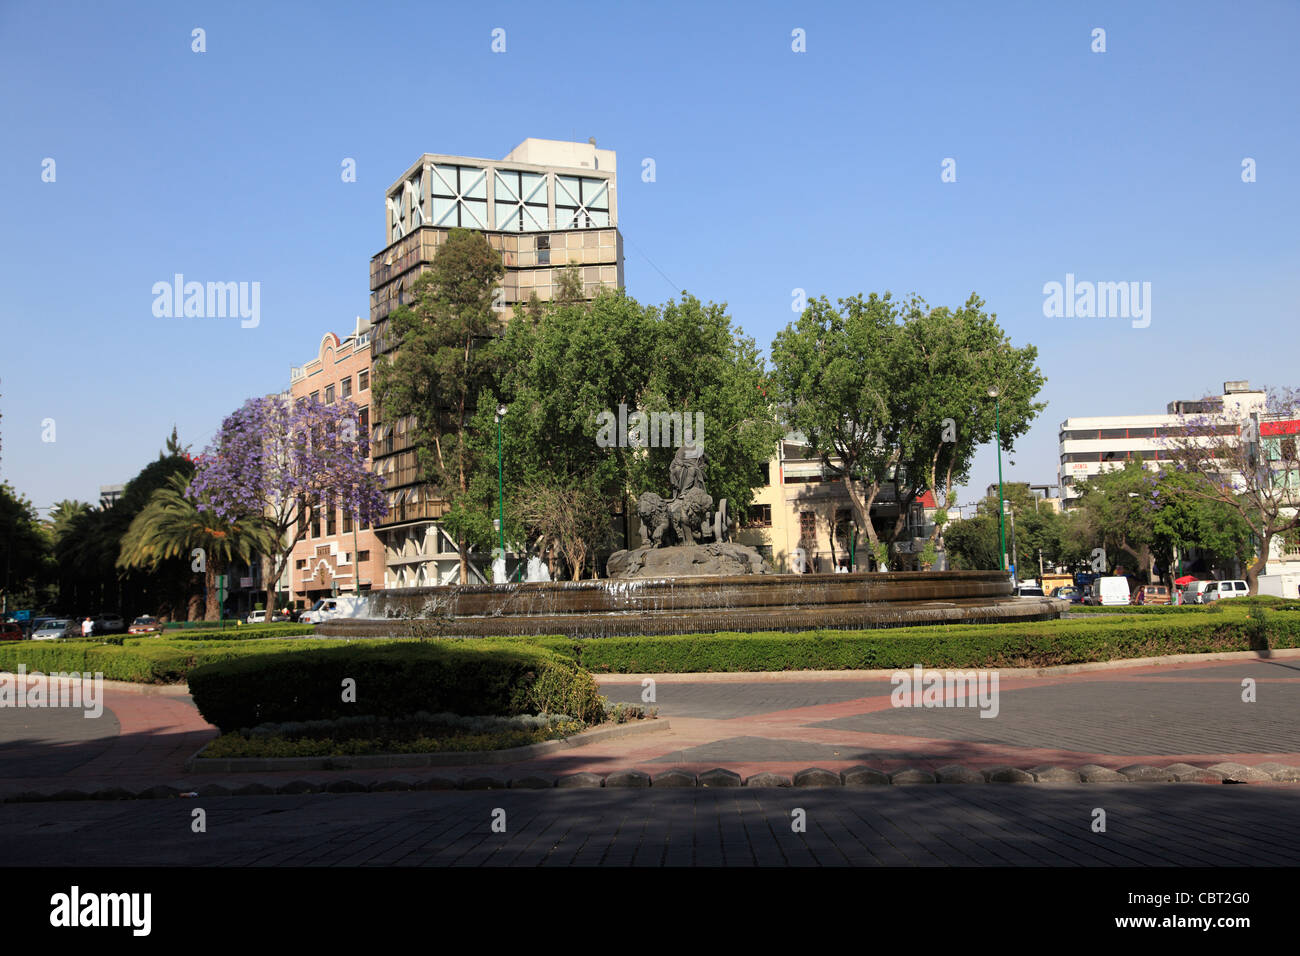 Madrid Plaza, Colonia Roma, trendy neighborhood, Mexico City, Mexico, North America Stock Photo